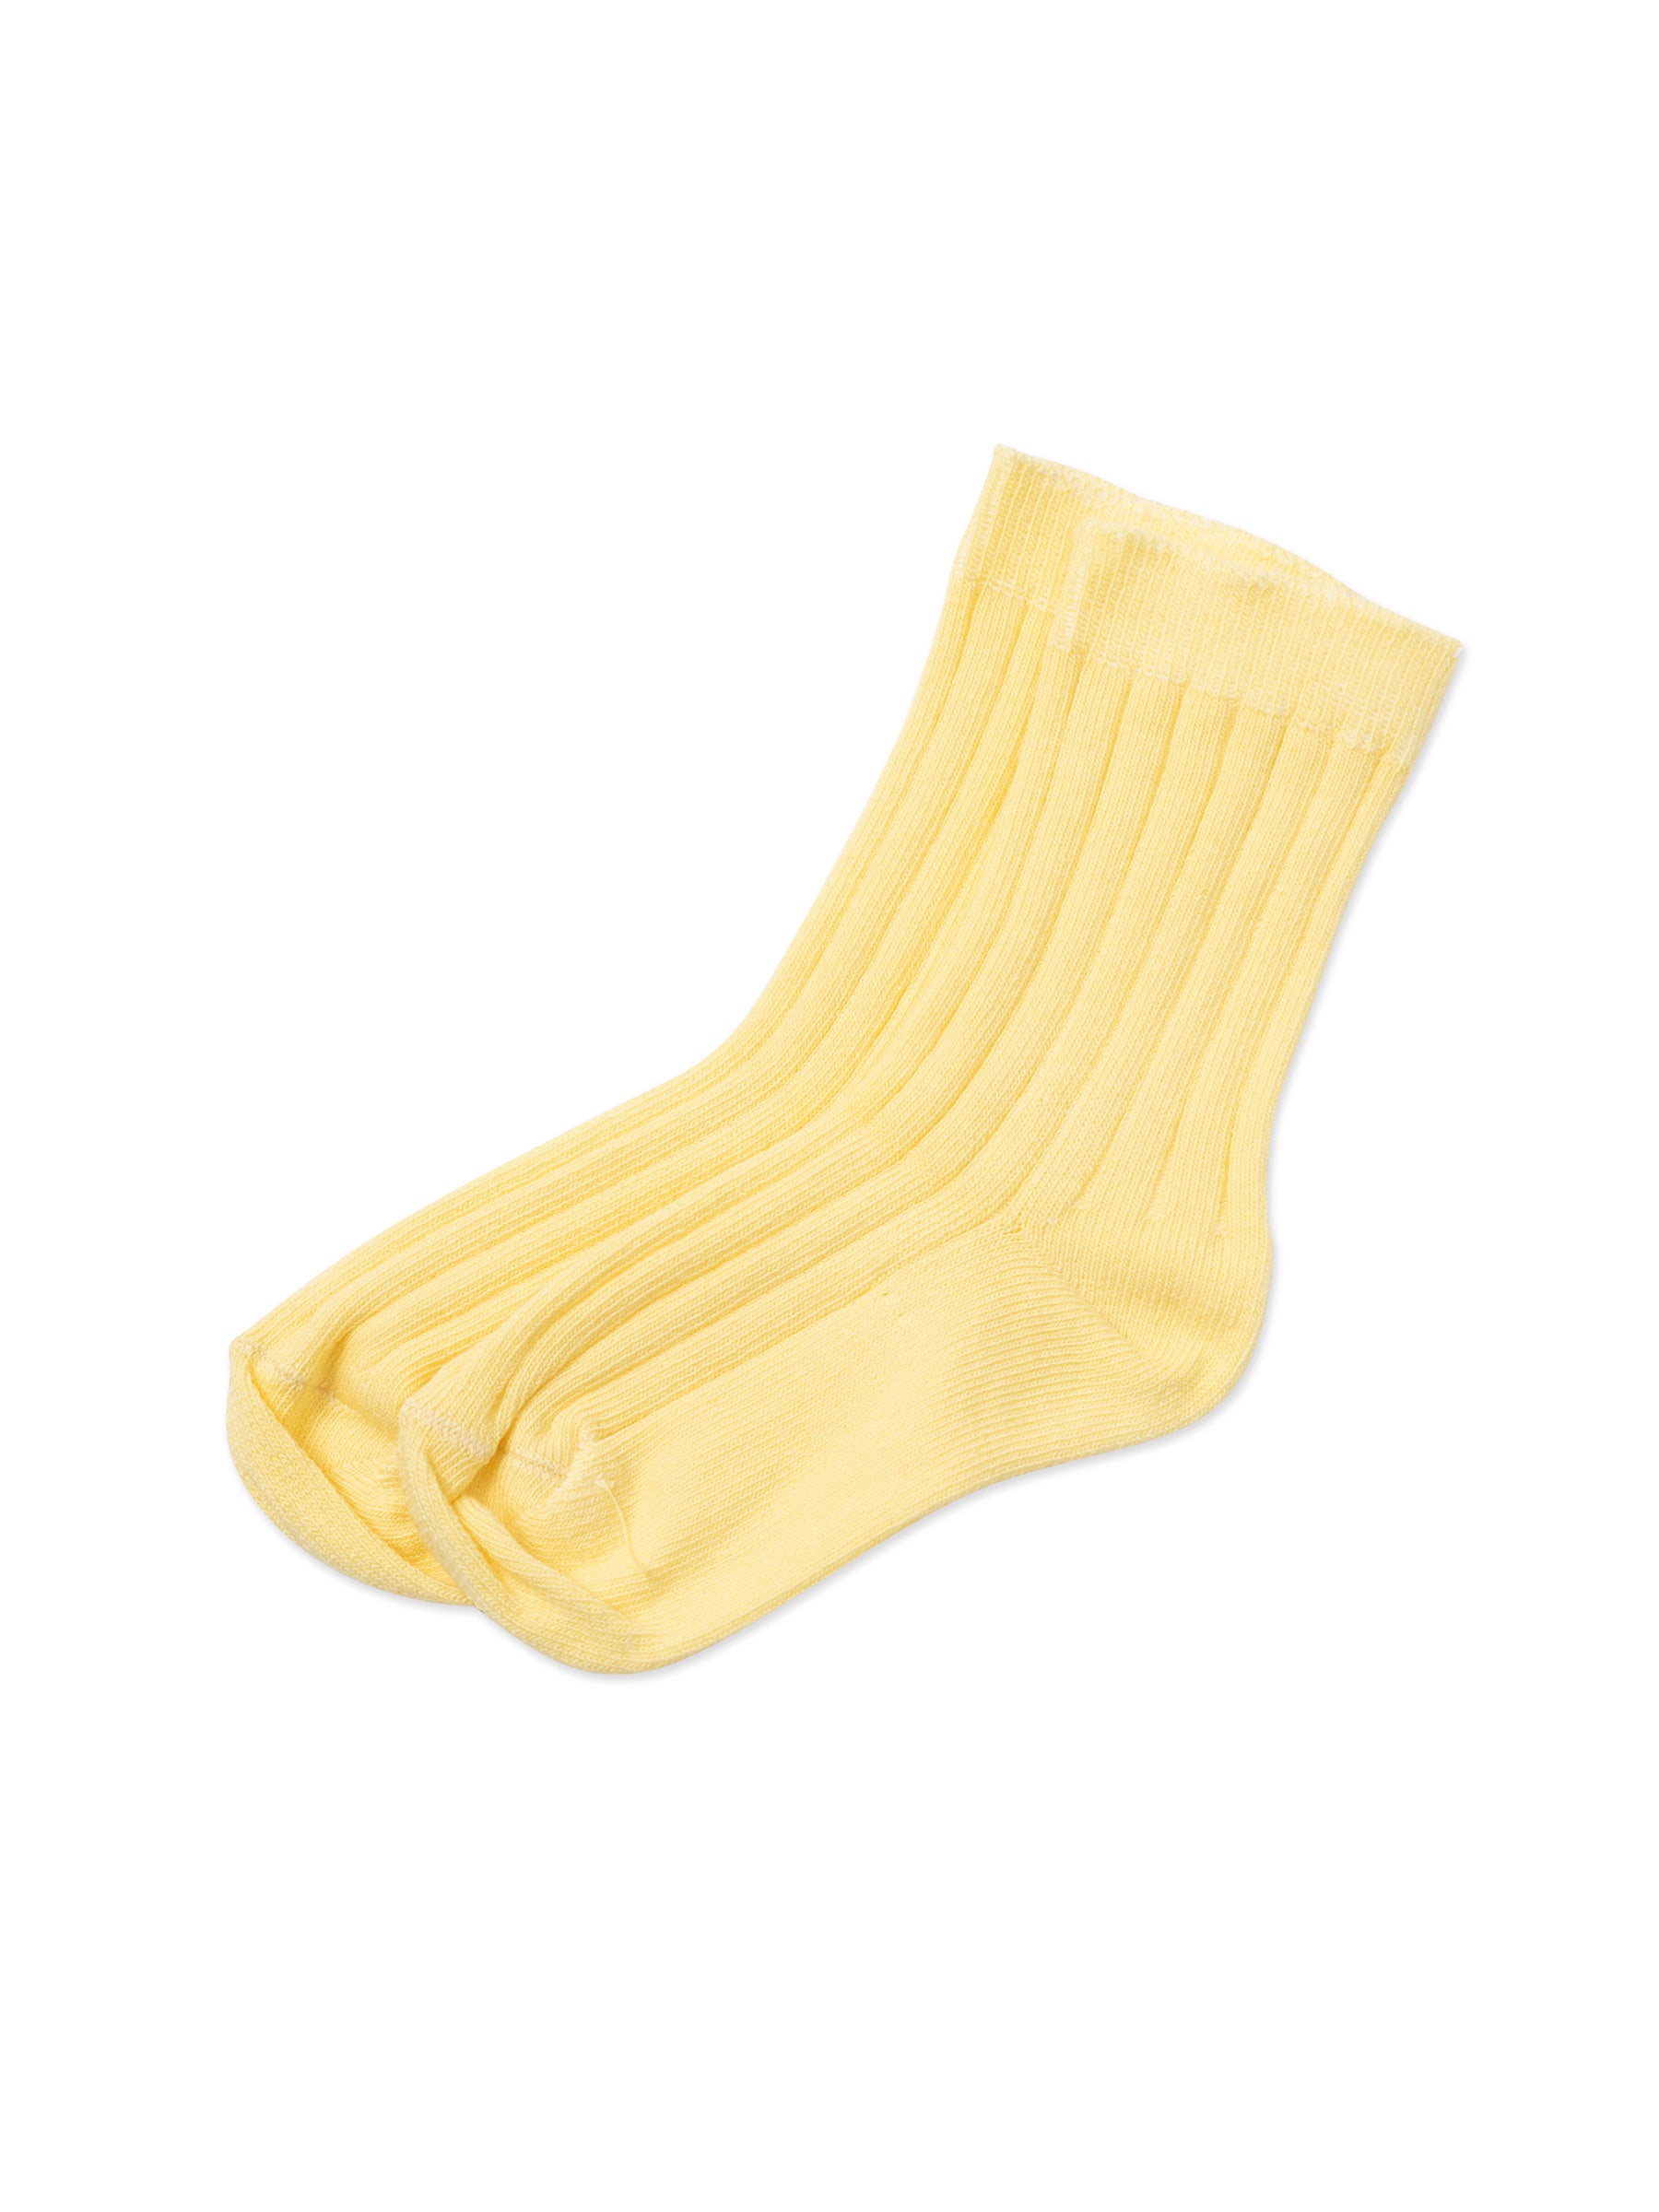 Girls Yellow Cotton Socks